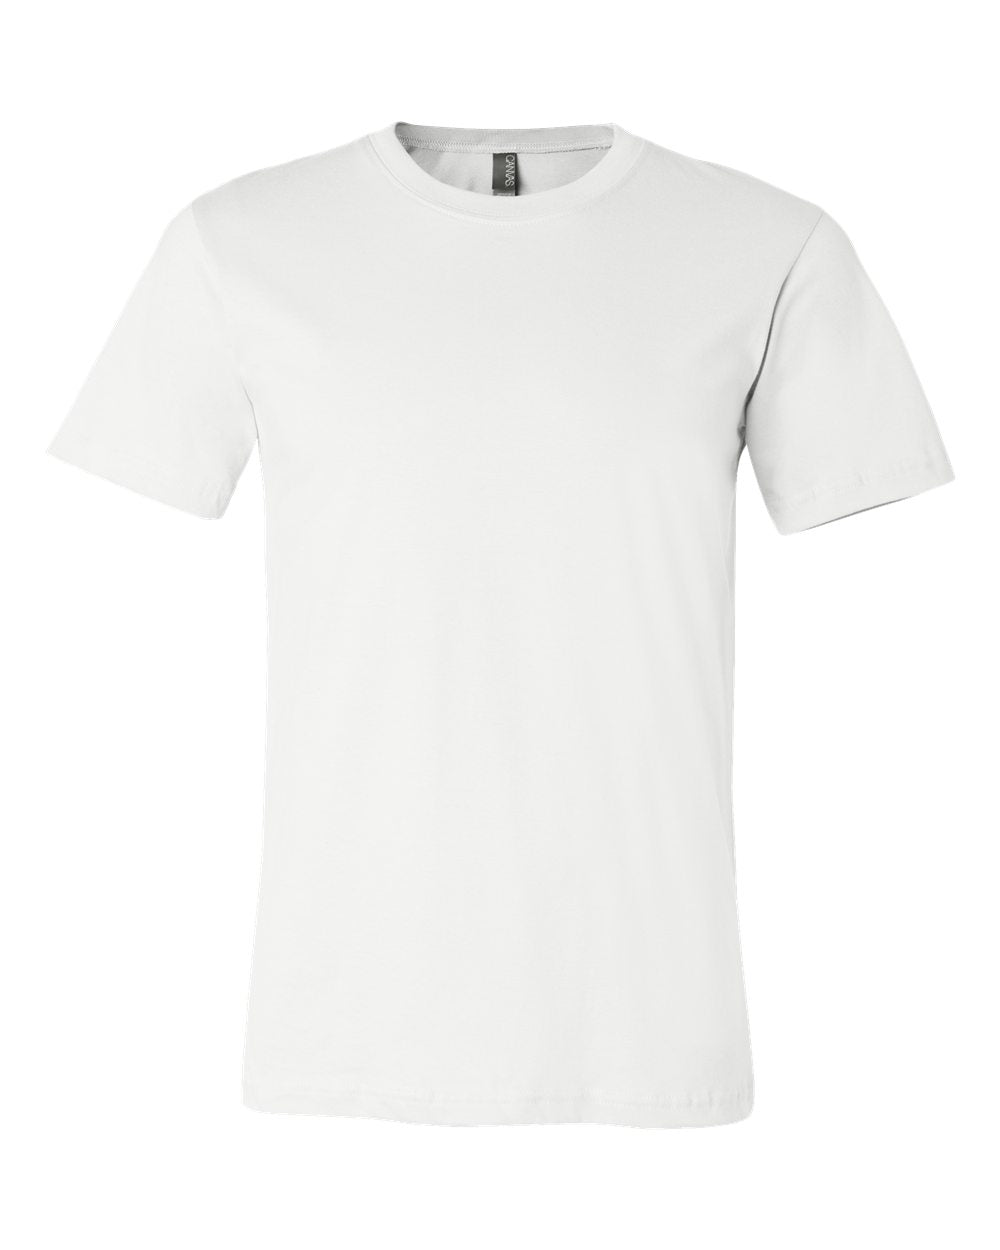 Titan Elite design 4 T-Shirt